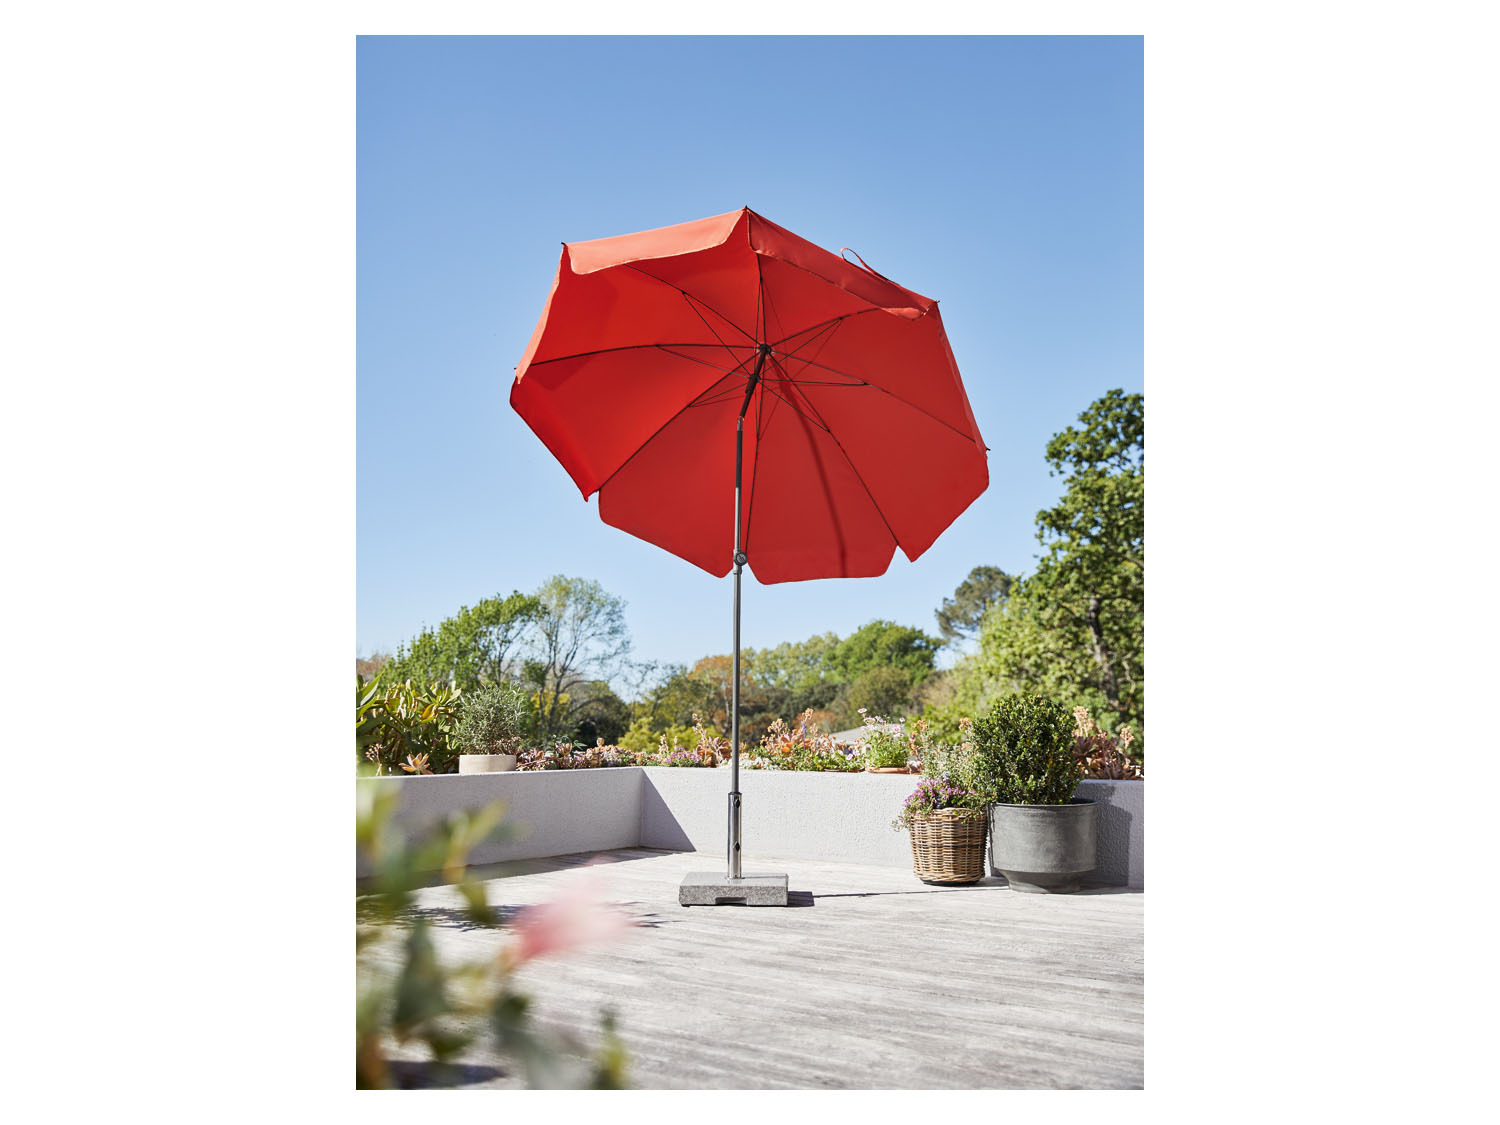 Onbepaald marionet Premier LIVARNO home Granieten parasolvoet vierkant | LIDL